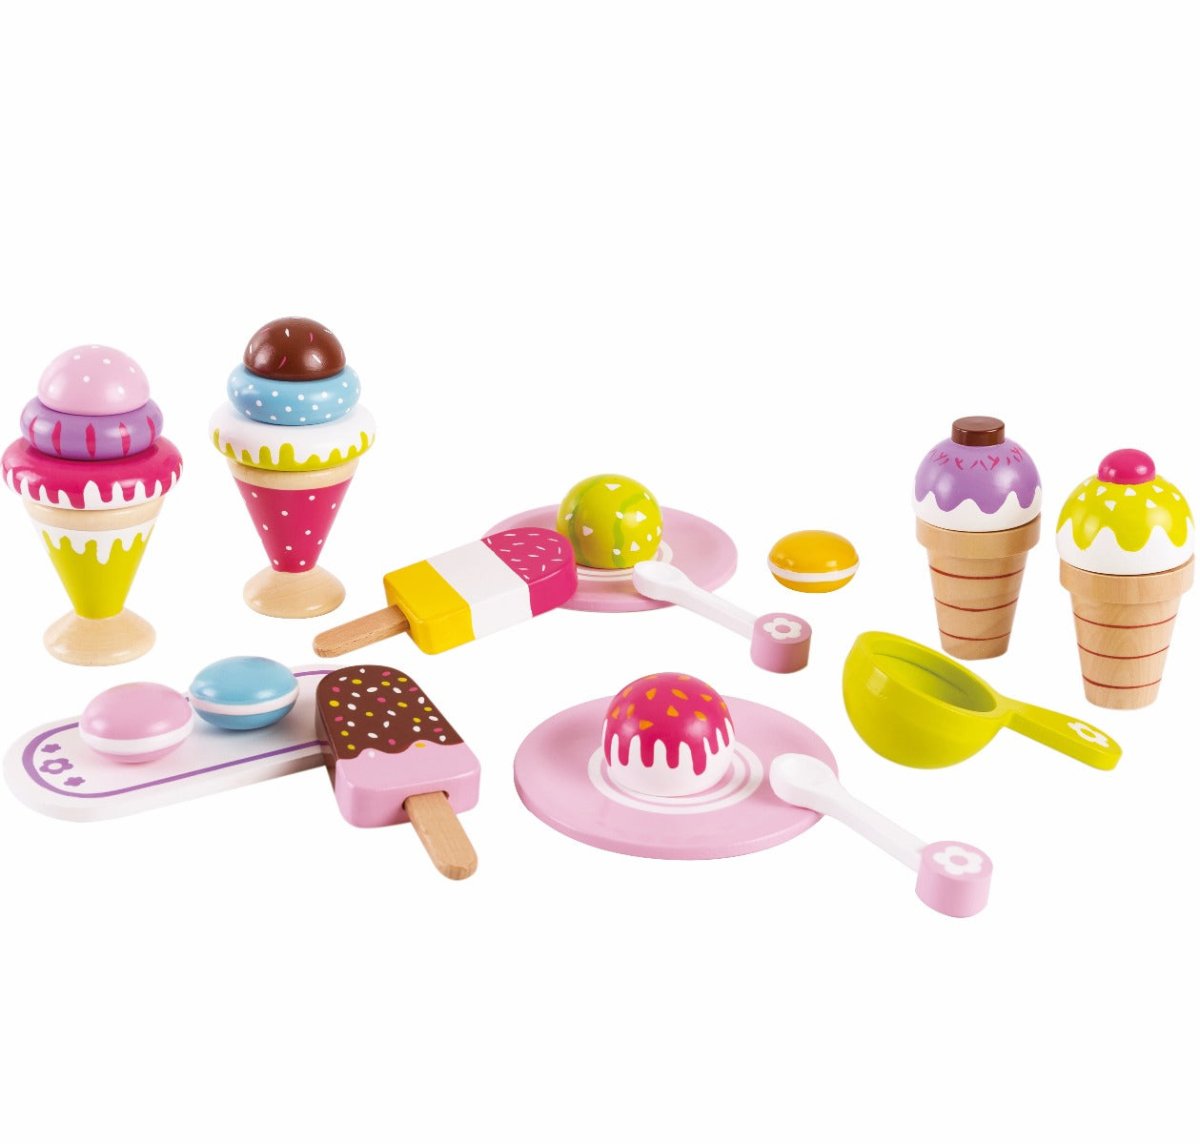 Pretend Ice Cream Sundae Non-Toxic Wooden Food Set for Imaginative Play